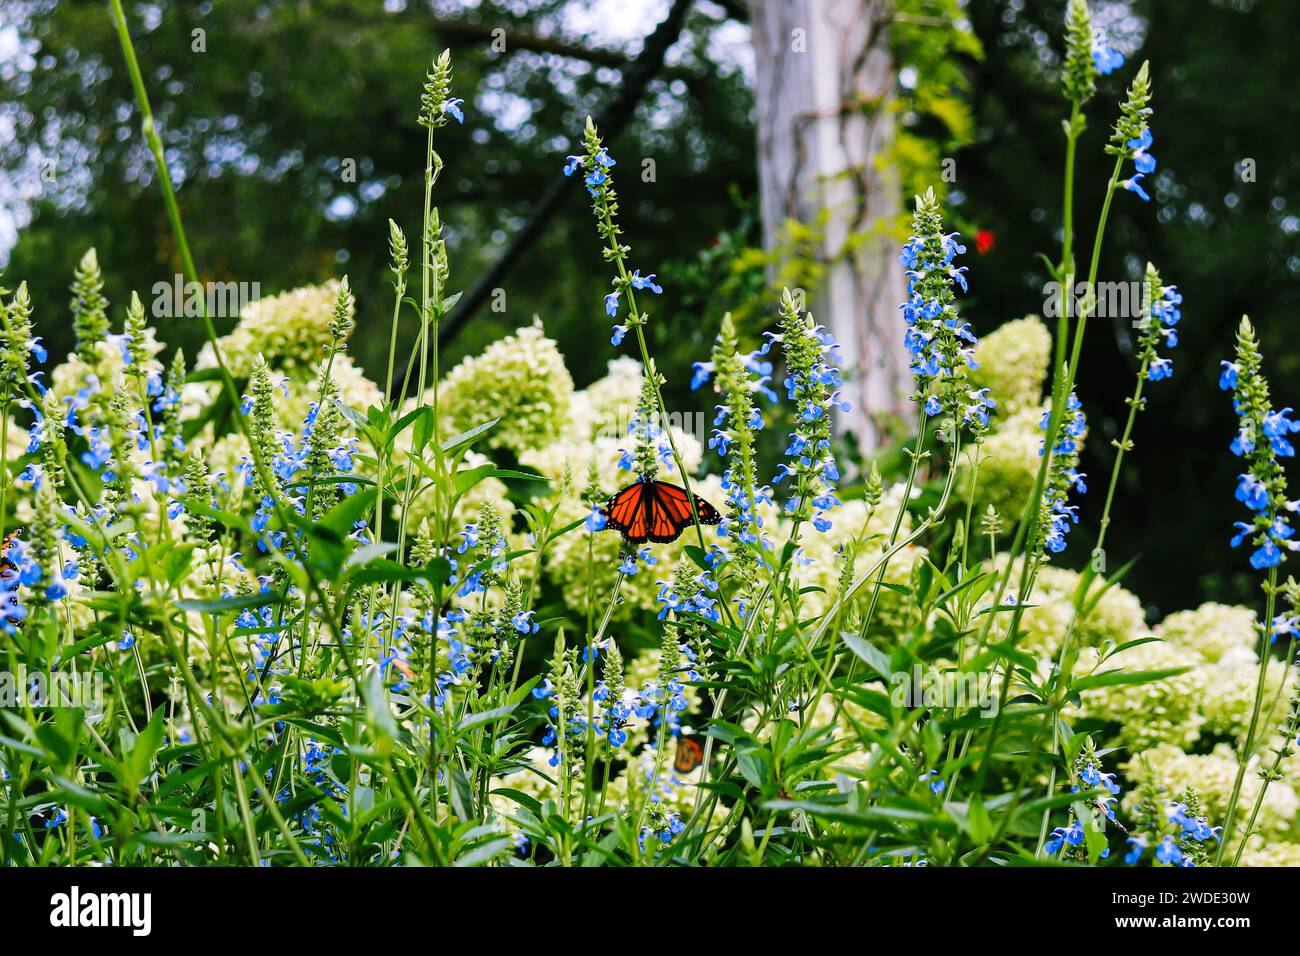 Single orange Monarch butterfly (Danaus plexippus) sitting on a blue Salvia flower in a greenery park Stock Photo